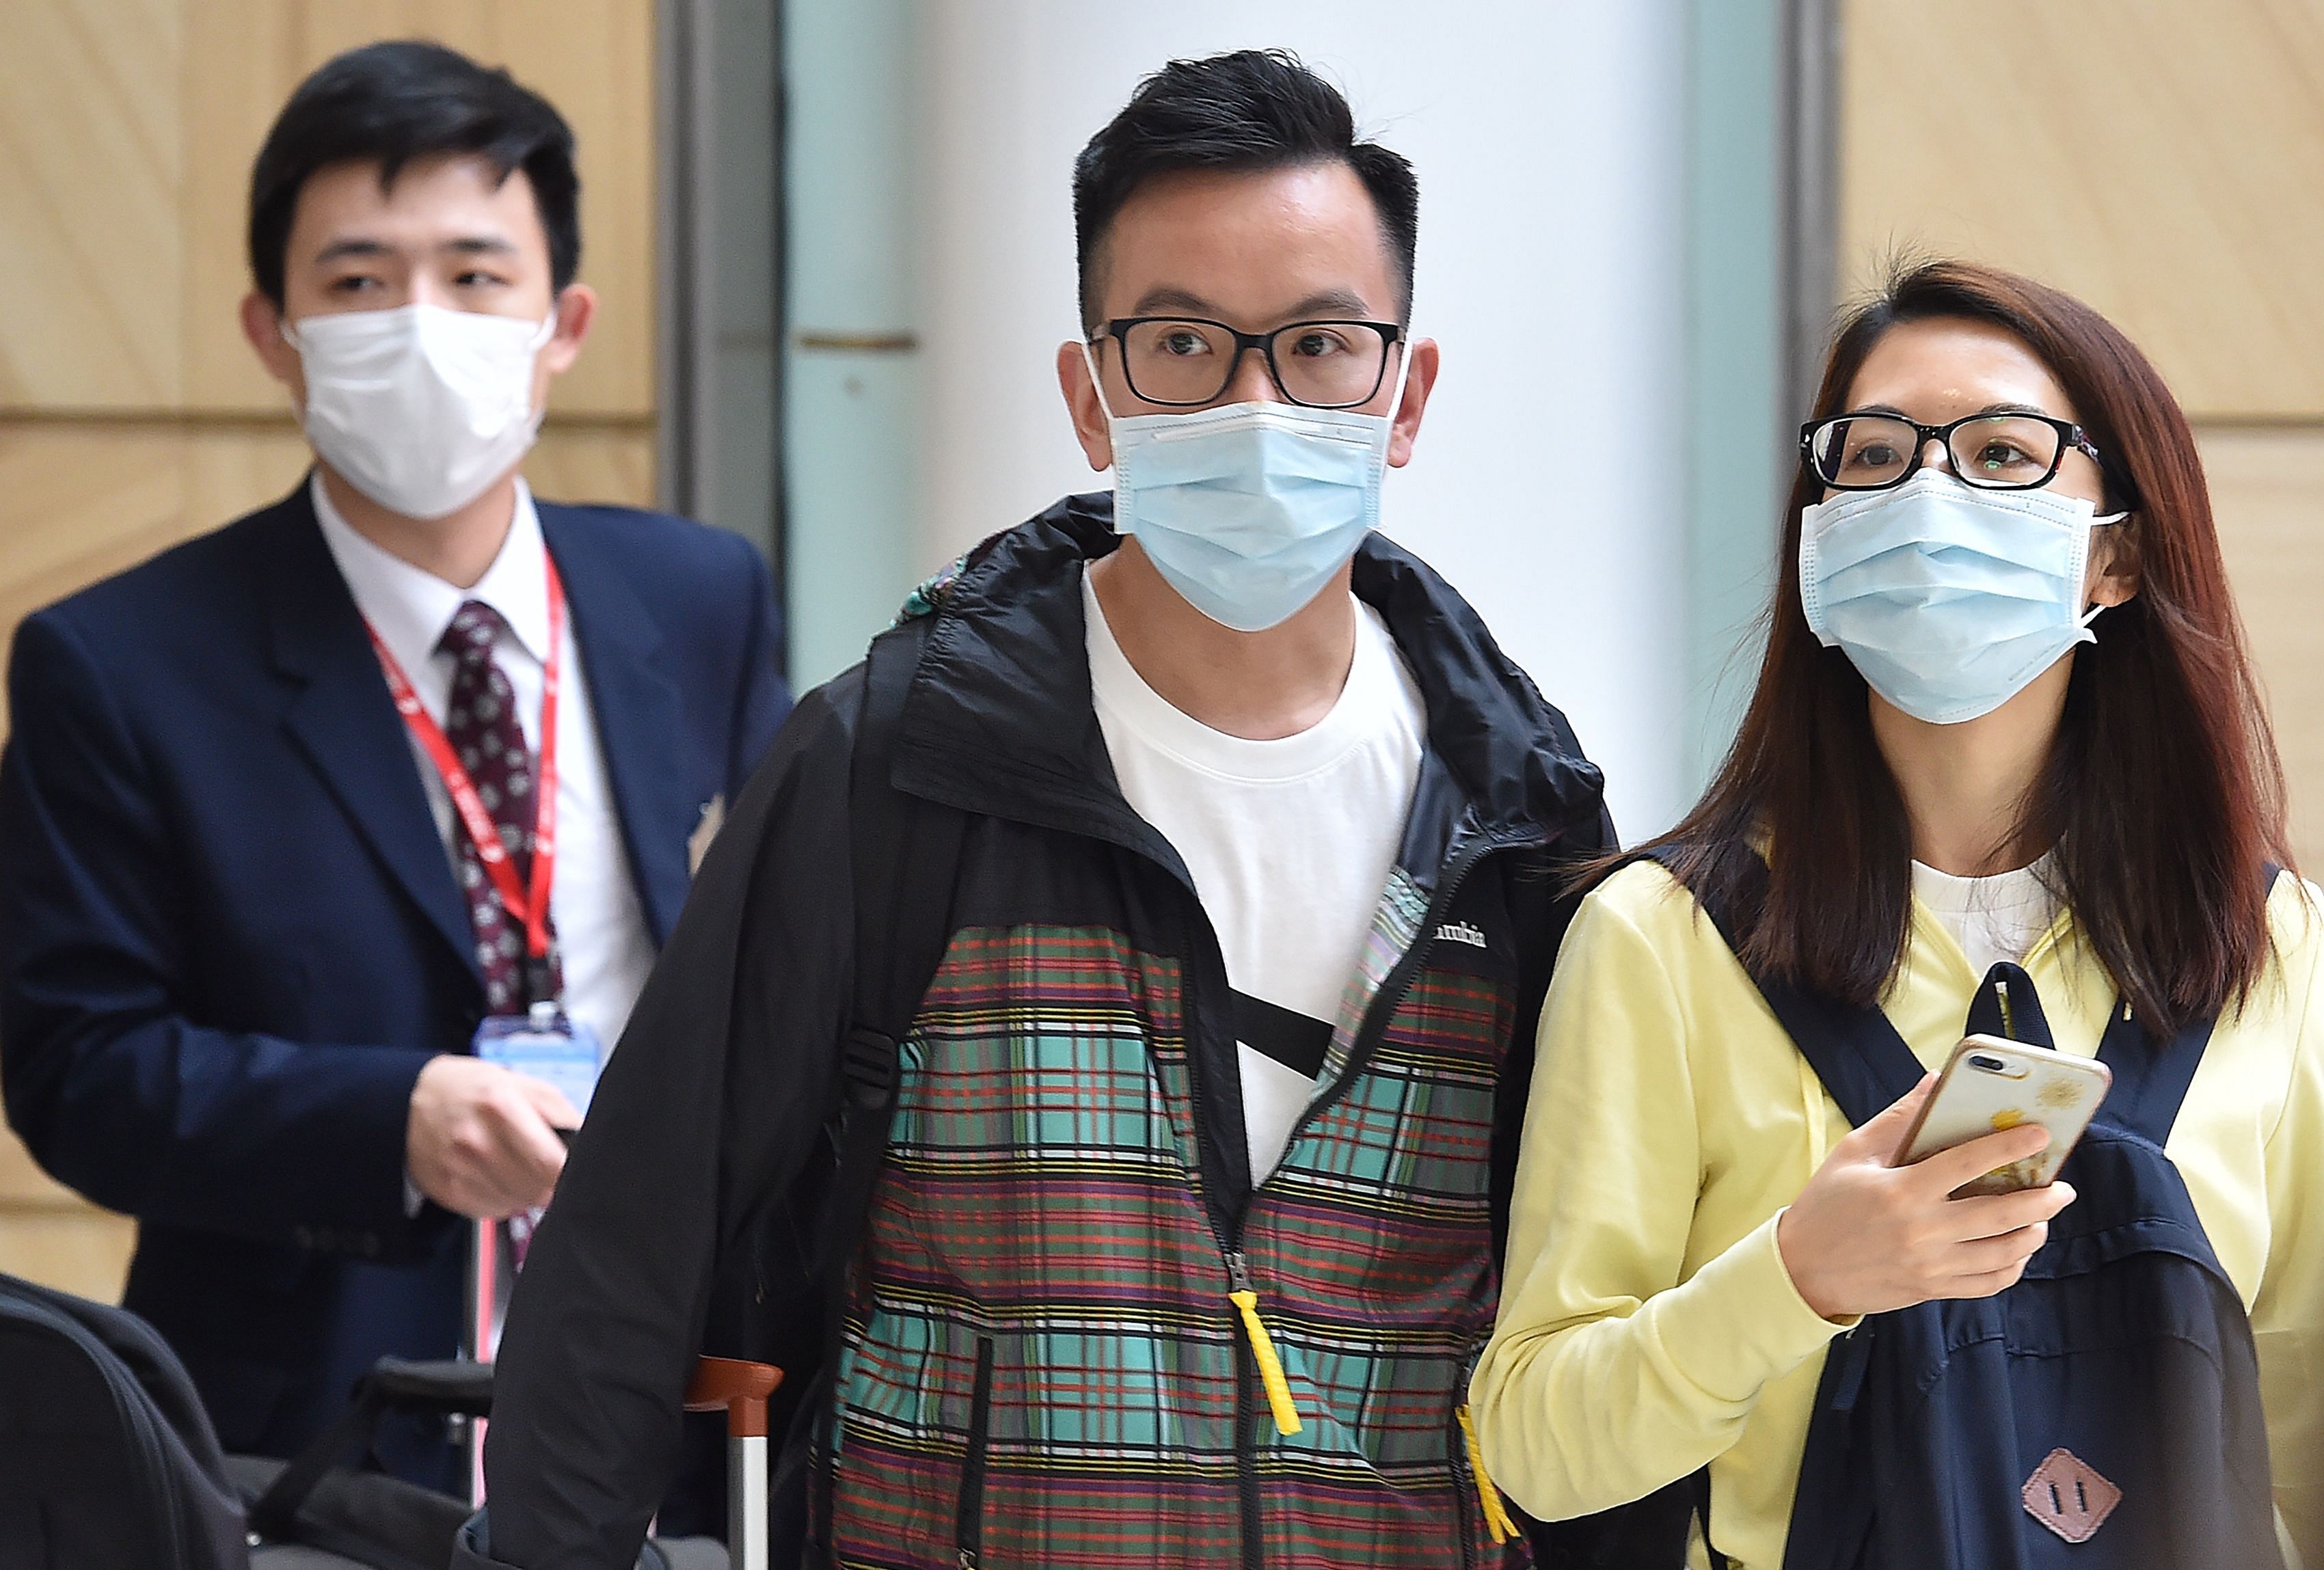 Passangers arrive at Sydney airport wearing masks after landing. (AFP Photo)